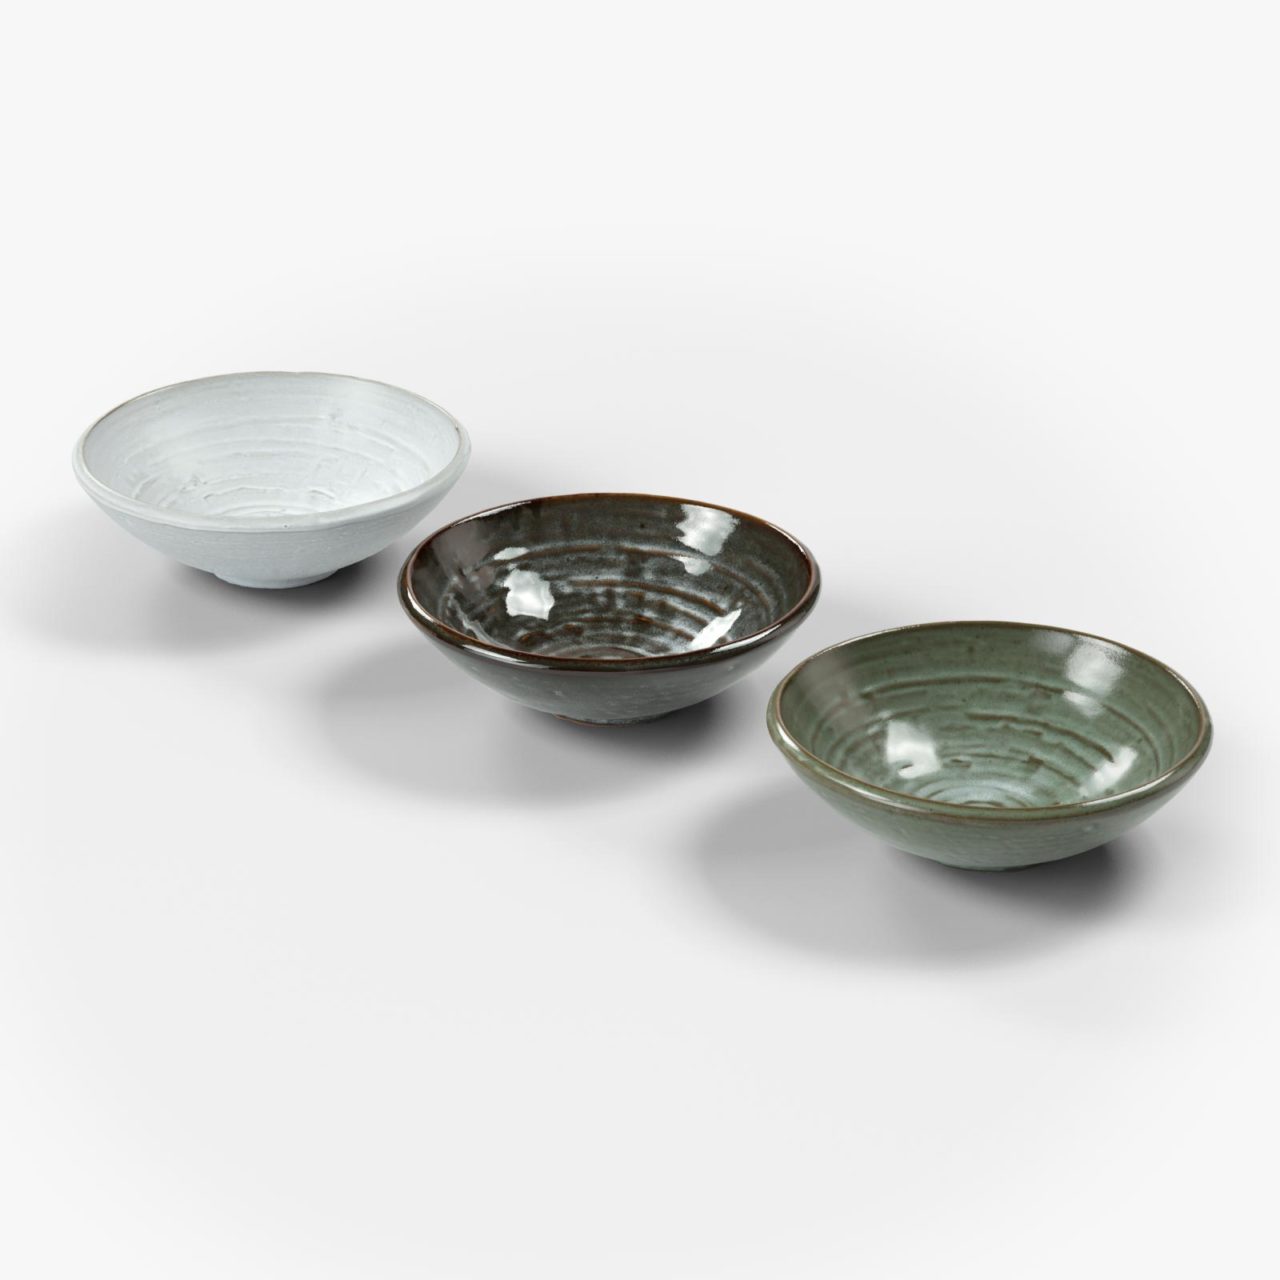 polypasta - madam stoltz ceramic bowl set black green white